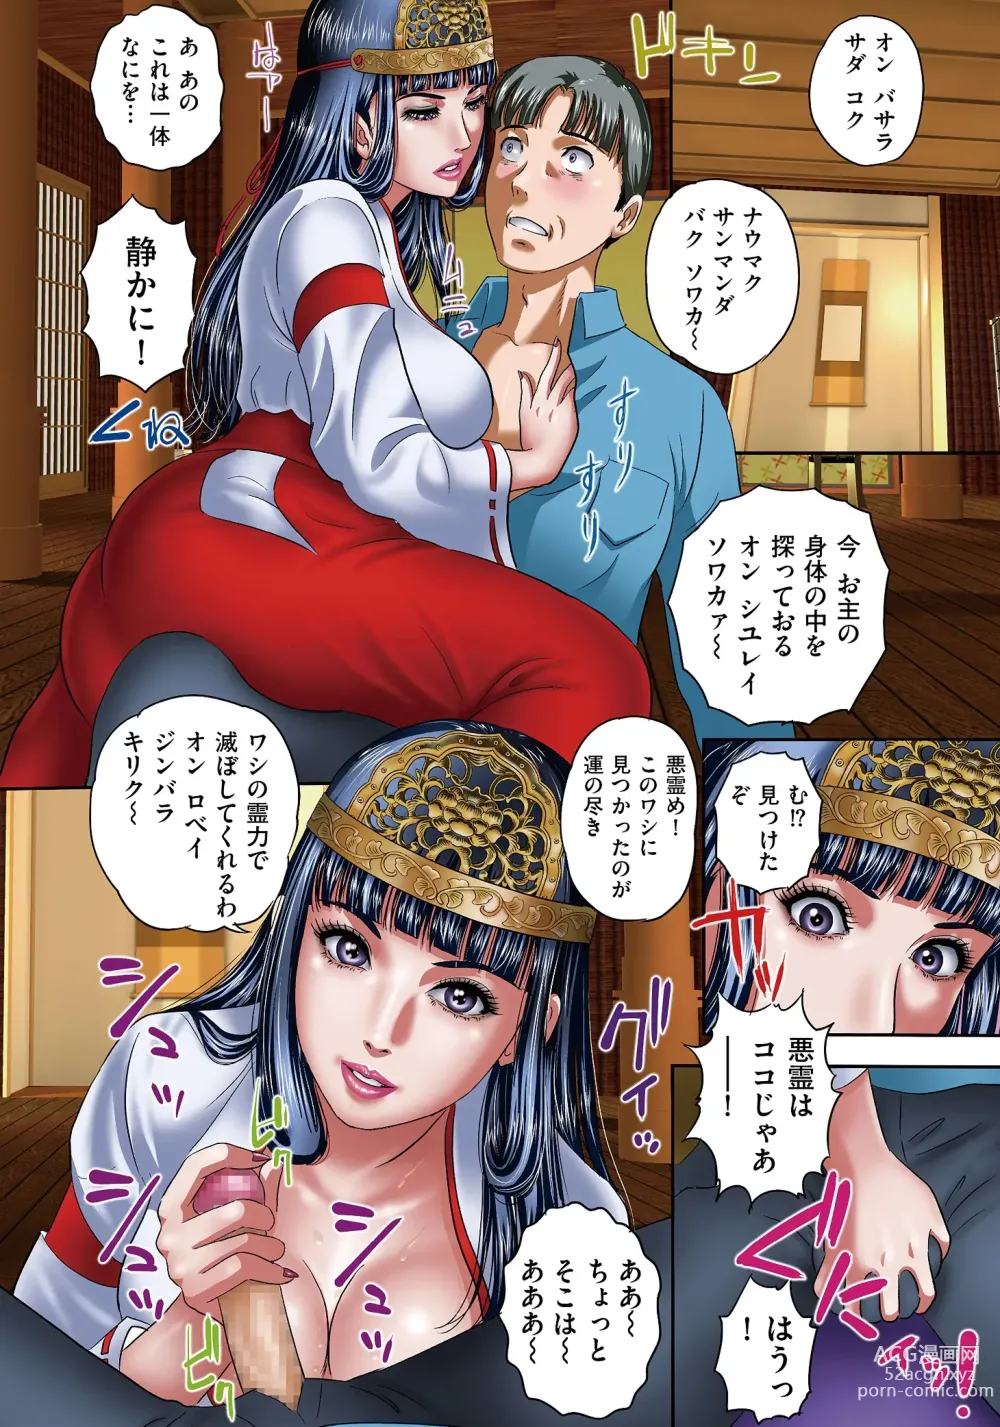 Page 37 of manga Mens Gold 2021 6episode